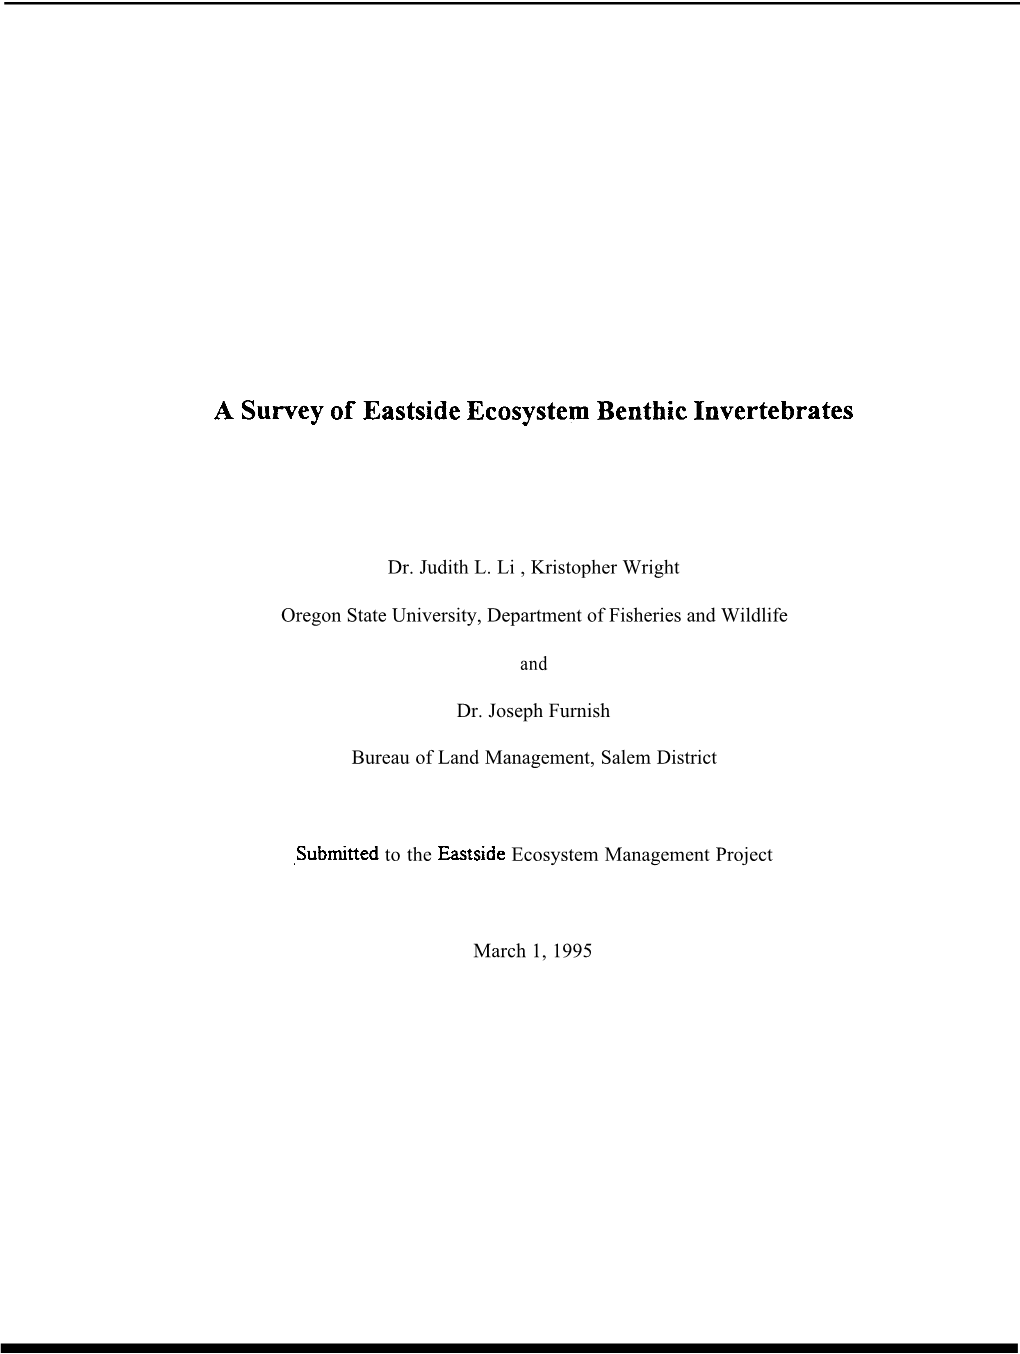 A Survey of Eastside Ecosystem Benthic Invertebrates